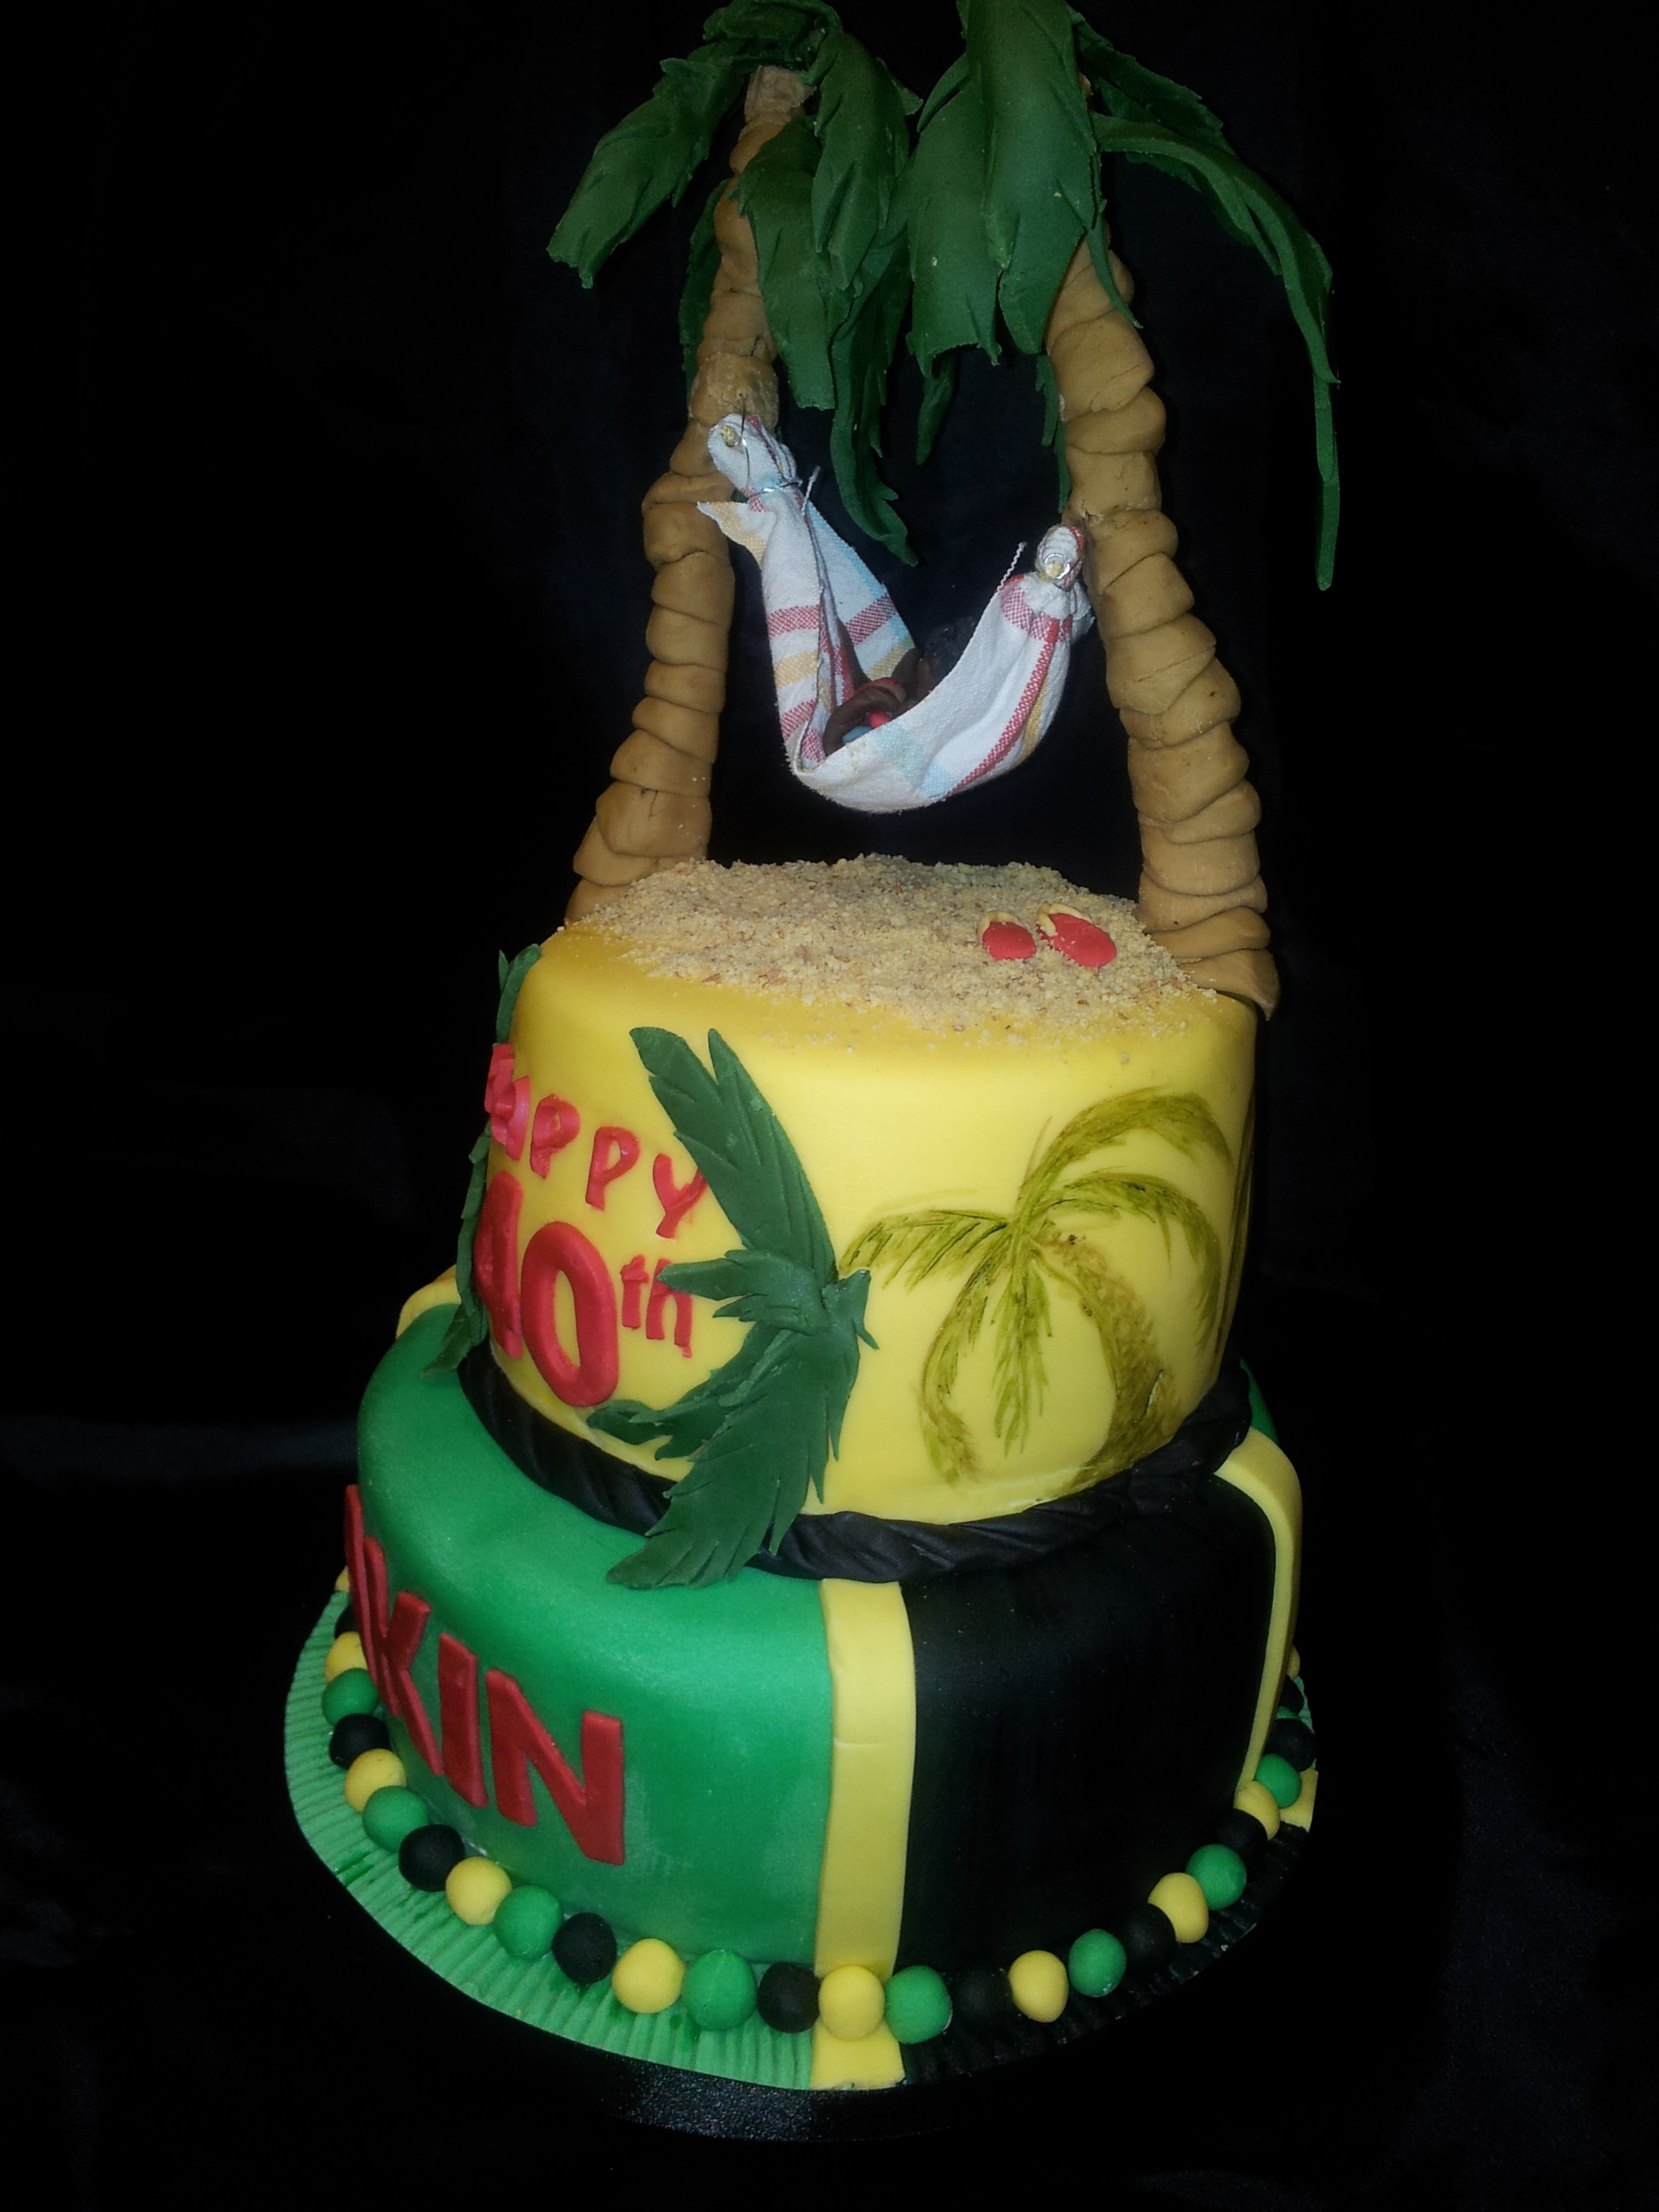 11 Jamaica Theme Birthday Cakes Photo Jamaican Themed Birthday Cake Jamaican Flag Birthday Cake And Jamaican Birthday Cake Snackncake